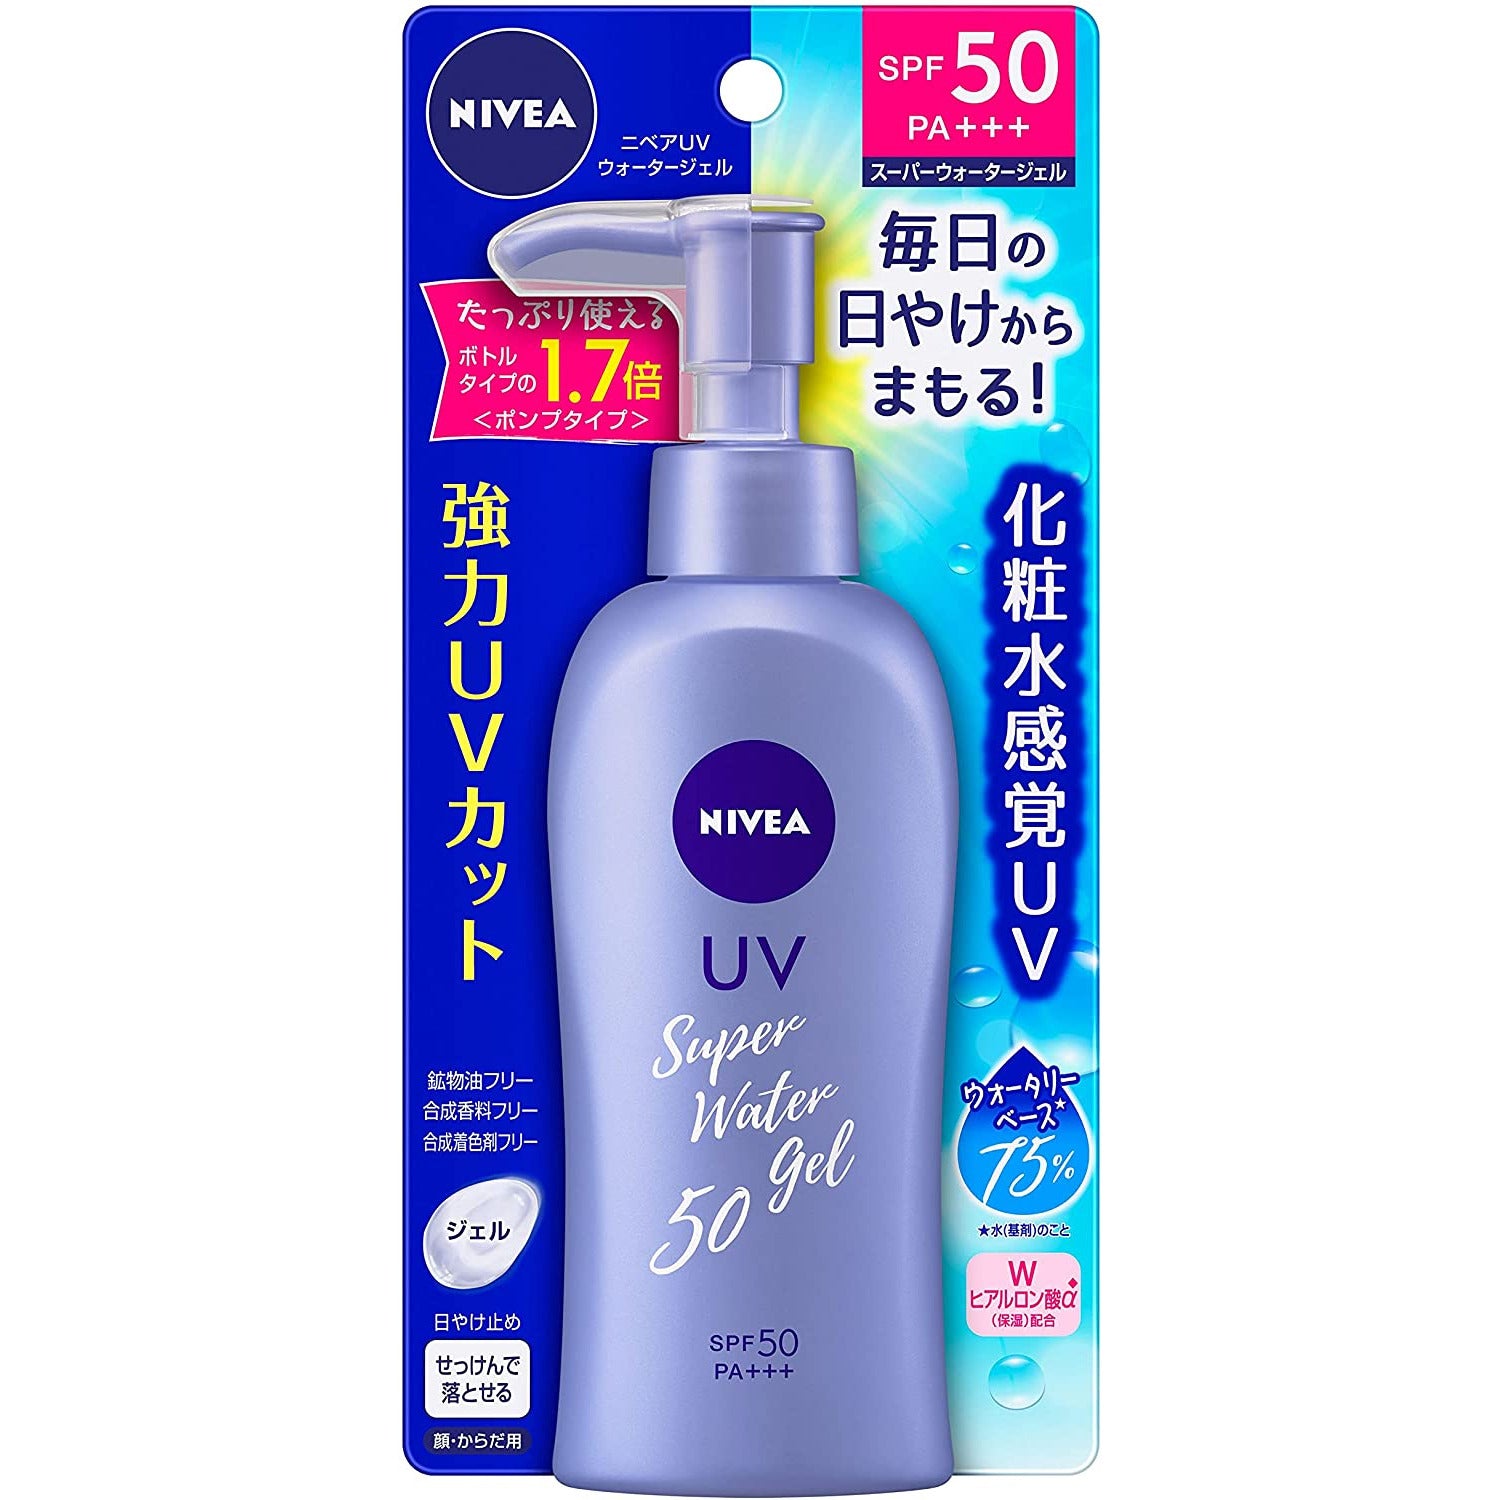 Nivea Sun Protect Water Gel SPF 50/PA +++ Pump 140g Import Japan